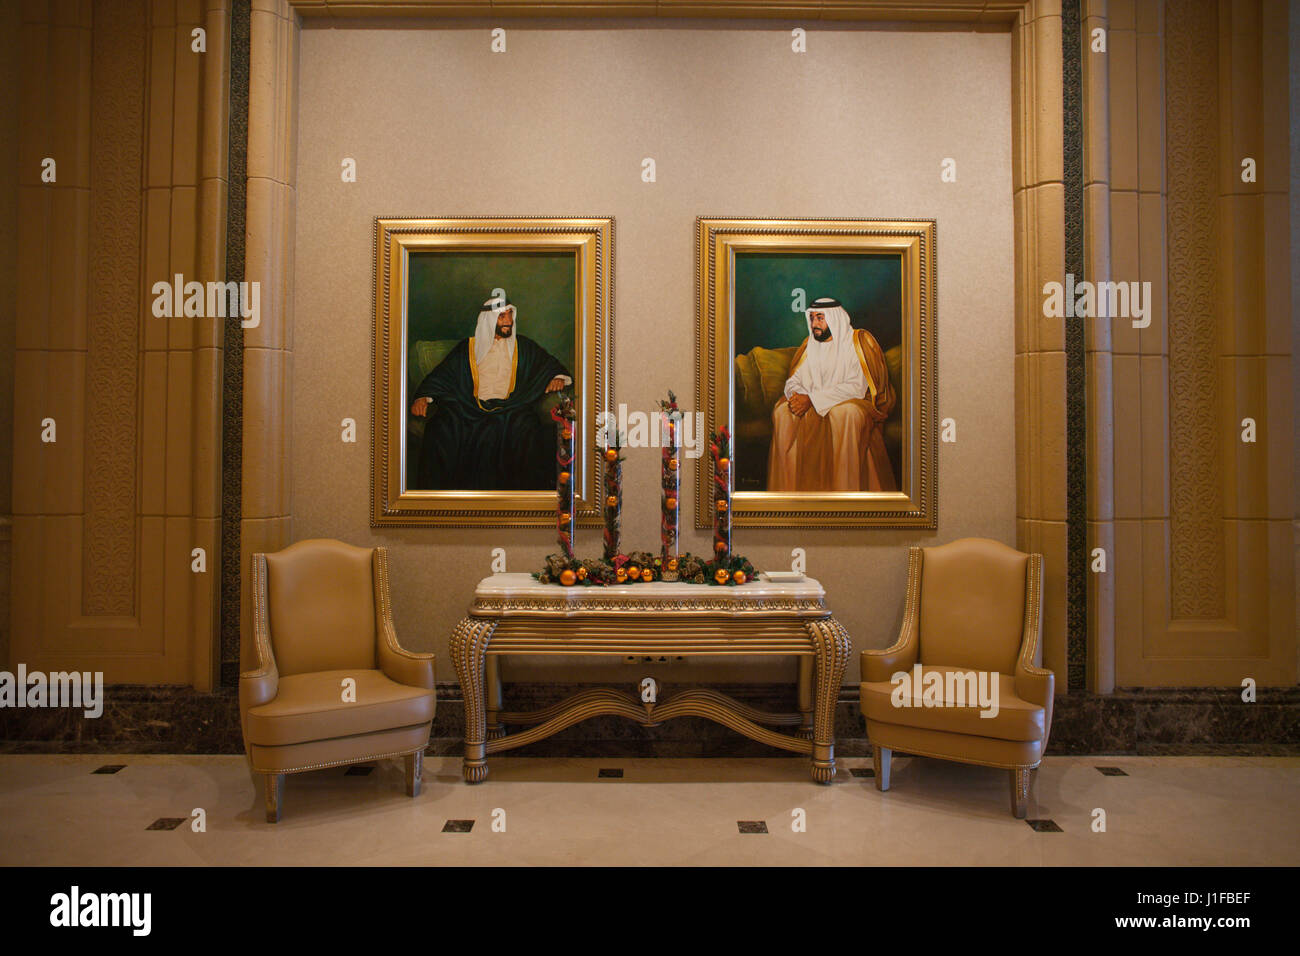 Dipinti di Sheikh Zayed bin Sultan Al Nahyan (L), e lo sceicco Khalifa bin Zayed Al Nahyan, presidente degli Emirati arabi uniti (R), nell'Emirates Palace hotel. Foto Stock